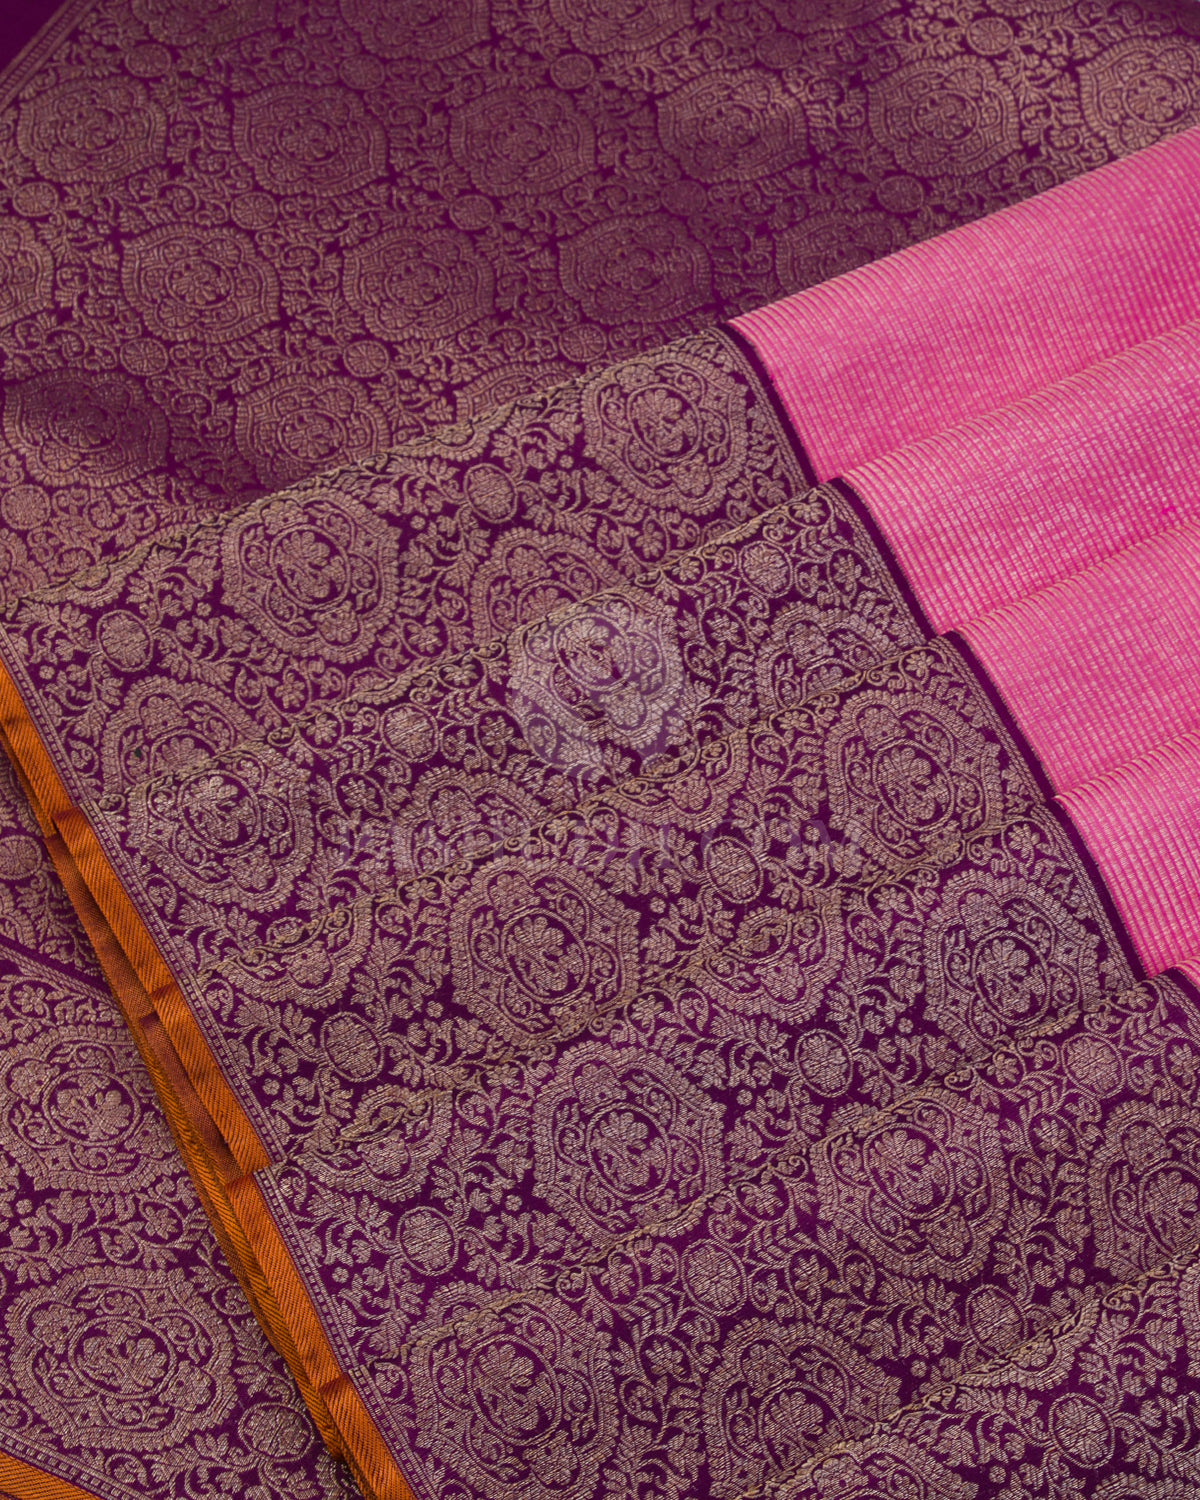 Hot Pink & Violet Kanjivaram Silk Saree - S983 - View 4